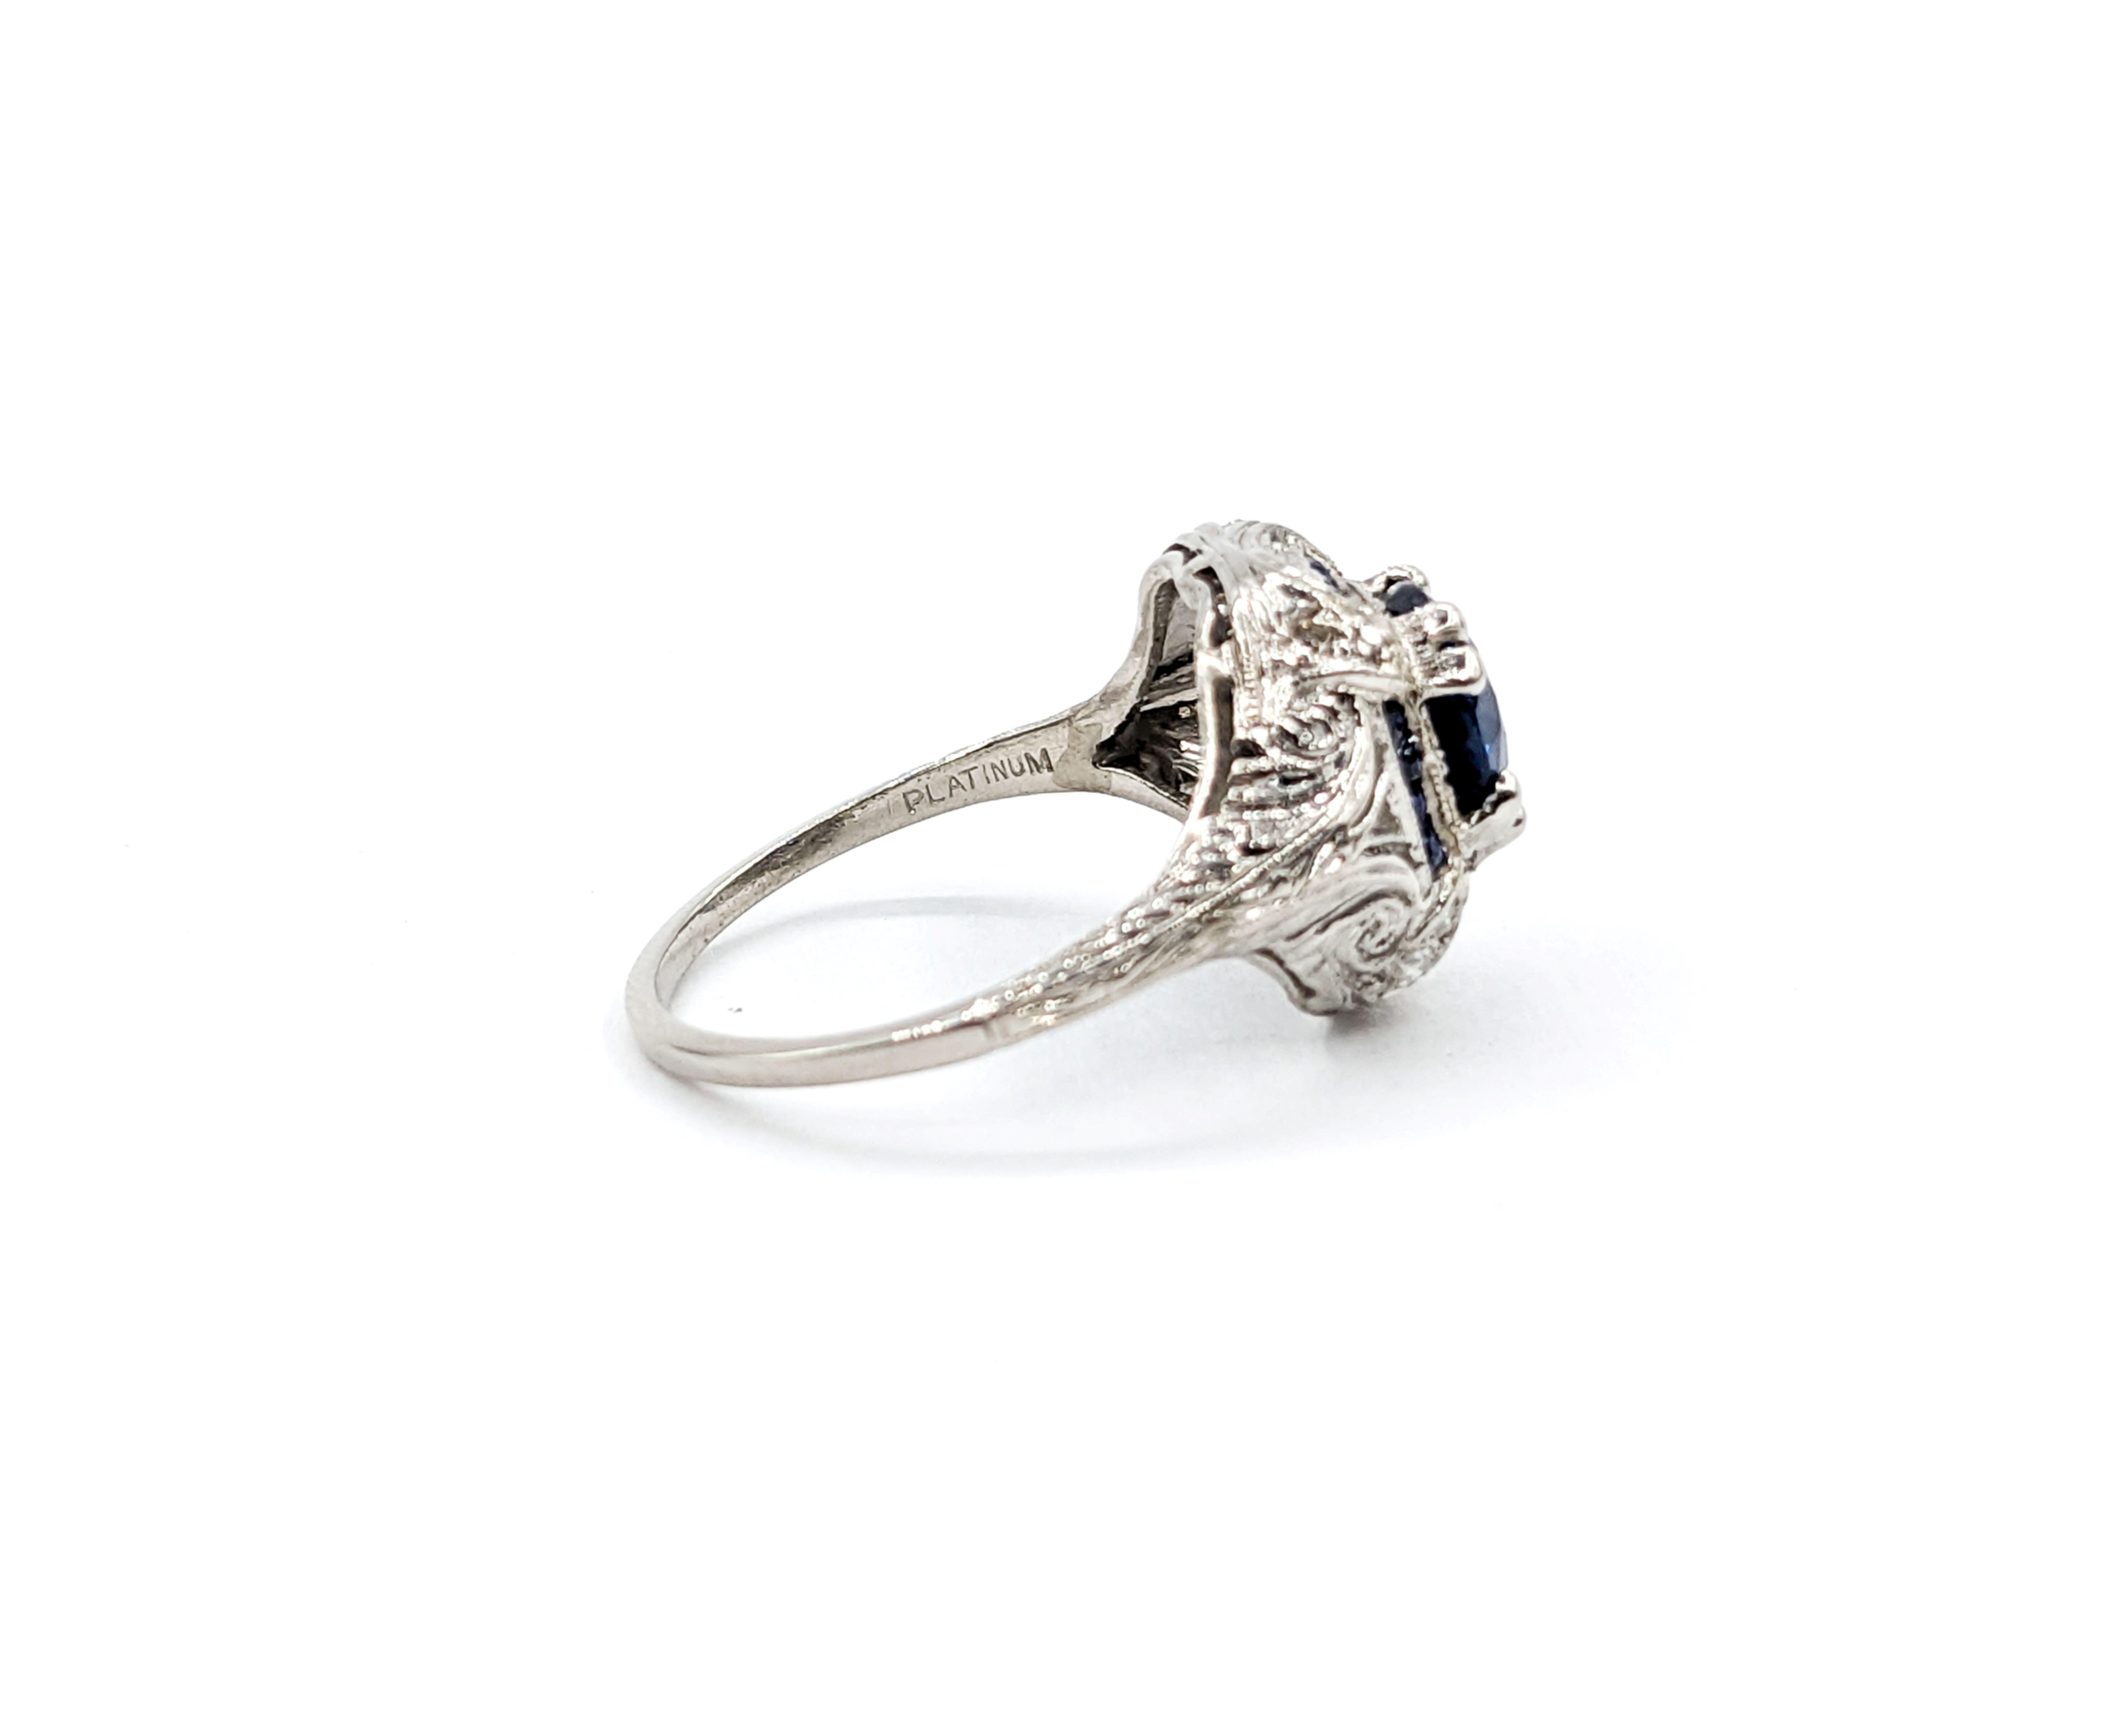 Women's Fantastic Antique Art Deco Ring with Sapphire and Diamonds in Platinum Filigree